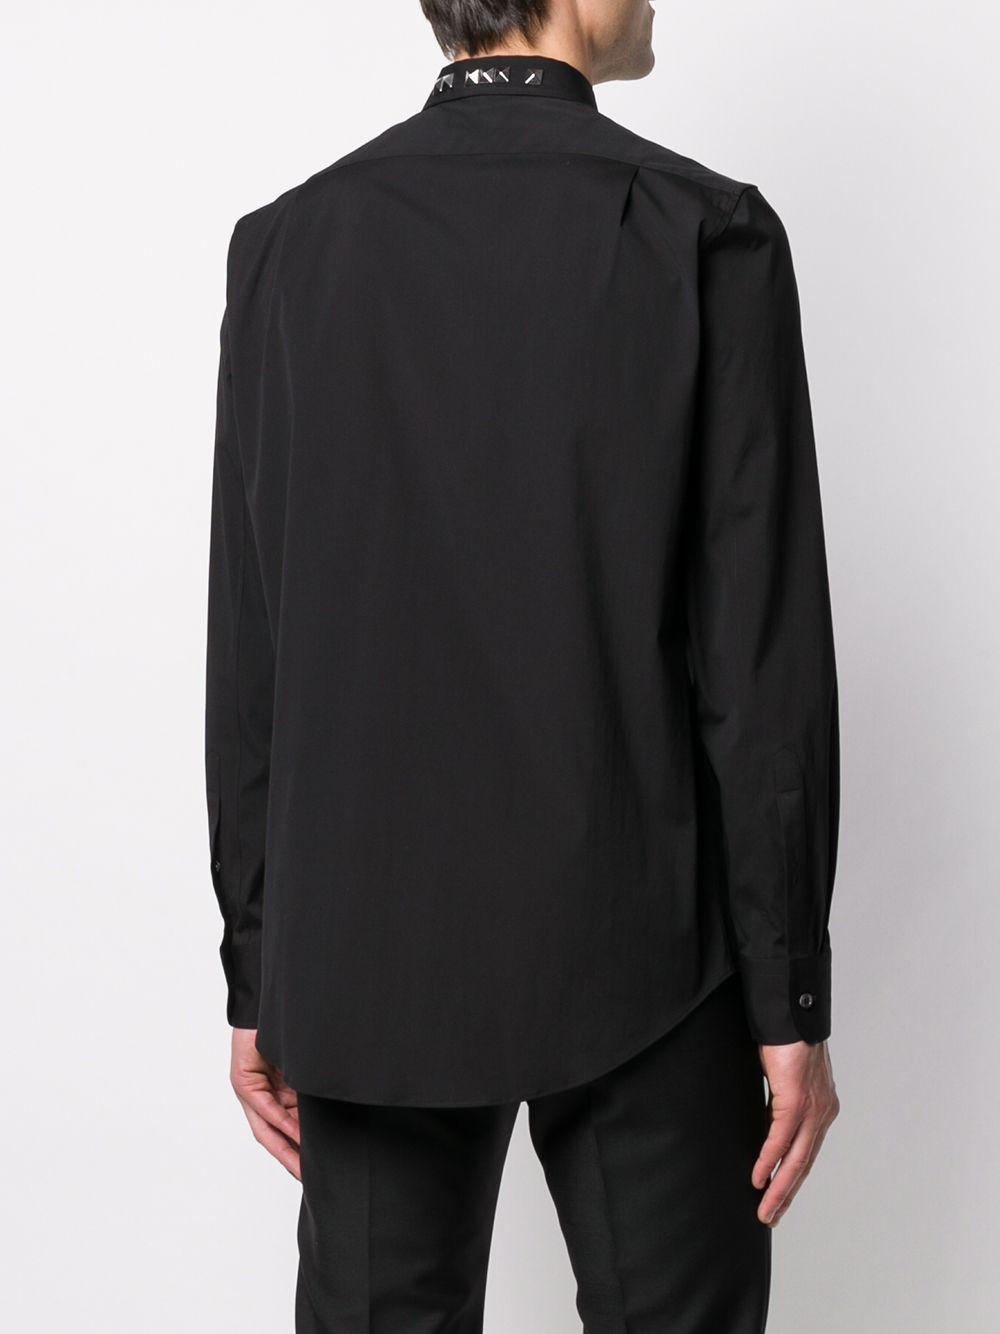 Alexander McQueen Cotton Studded Collar Shirt in Black for Men - Lyst